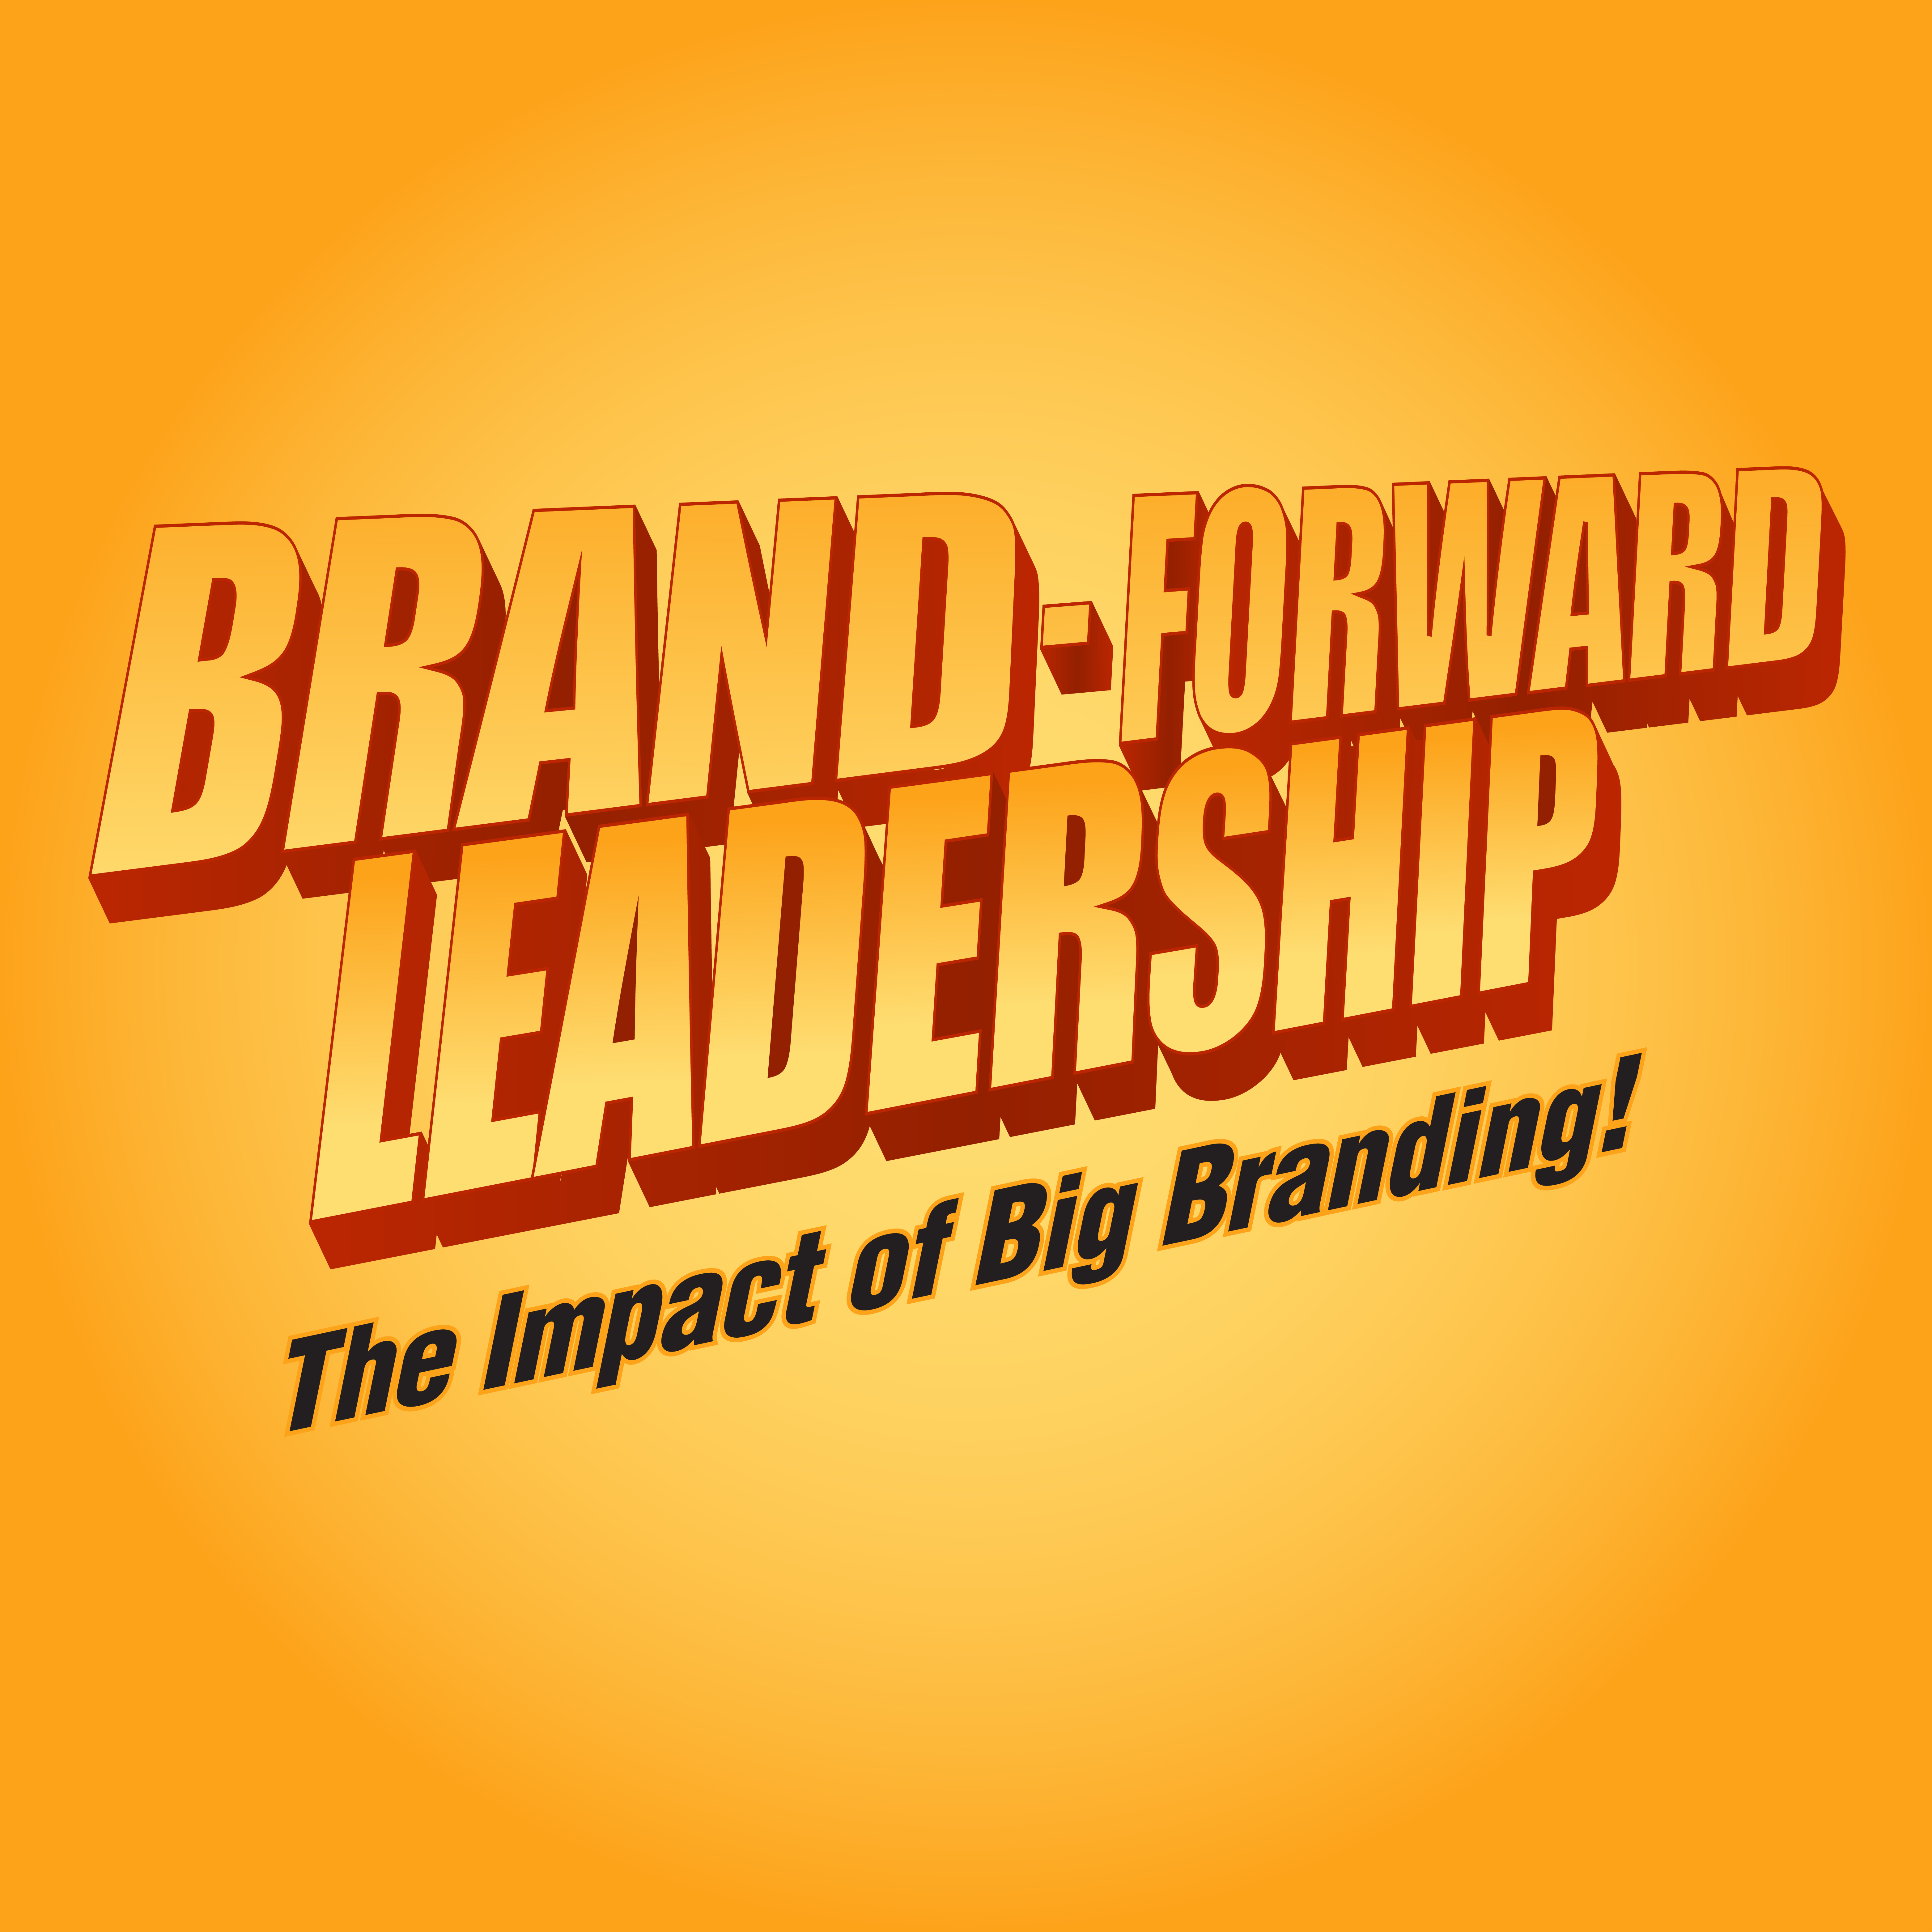 Brand-Forward Leadership: The Impact of Big Branding!